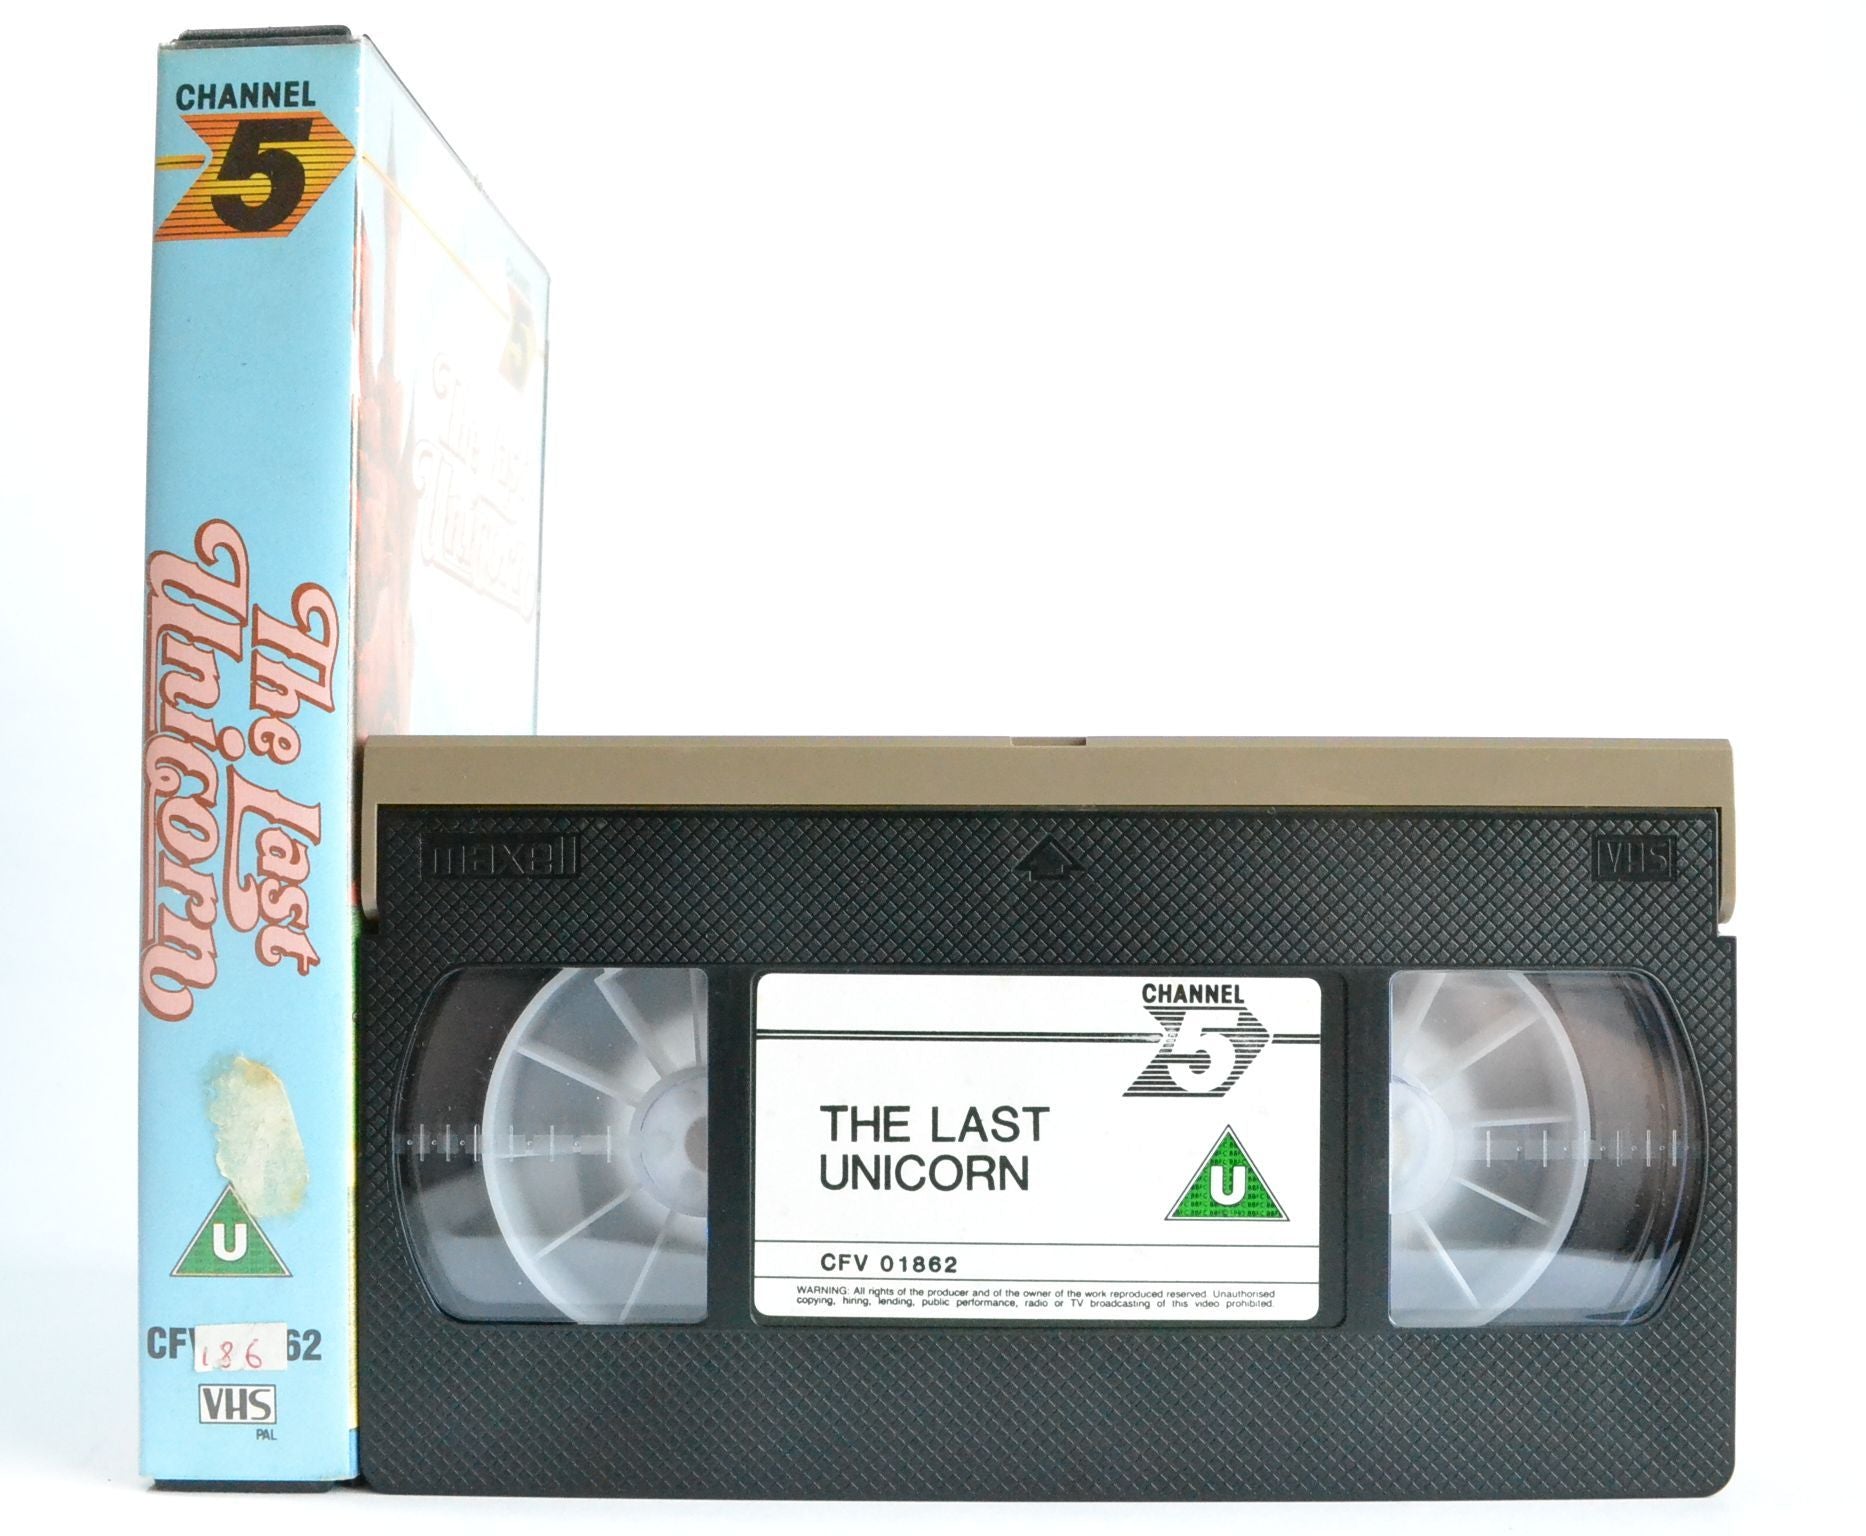 The Last Unicorn: Channel 5 (1986) - Lord Grade - Rankin Bass - Peter Beagle - VHS-